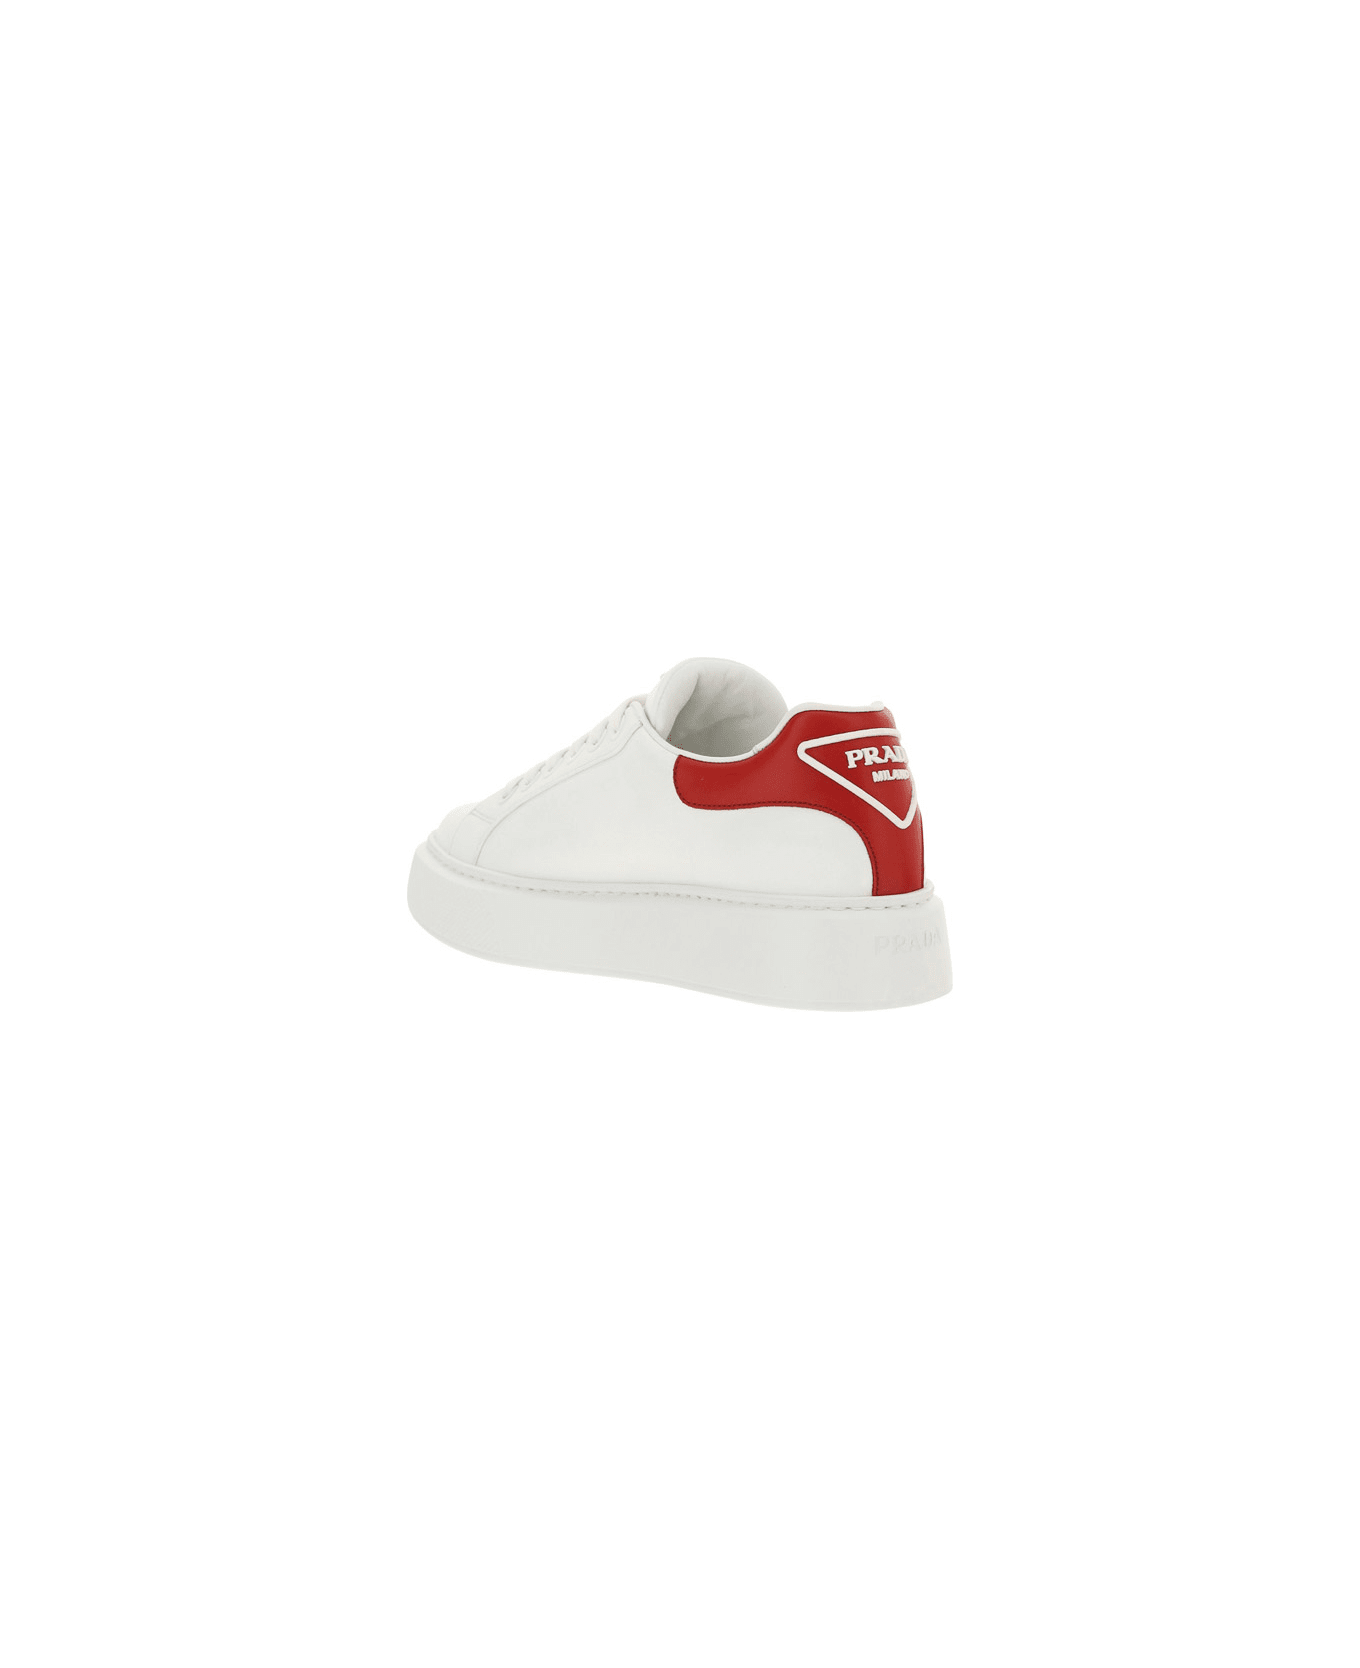 Prada Sneakers - Bianco+rosso